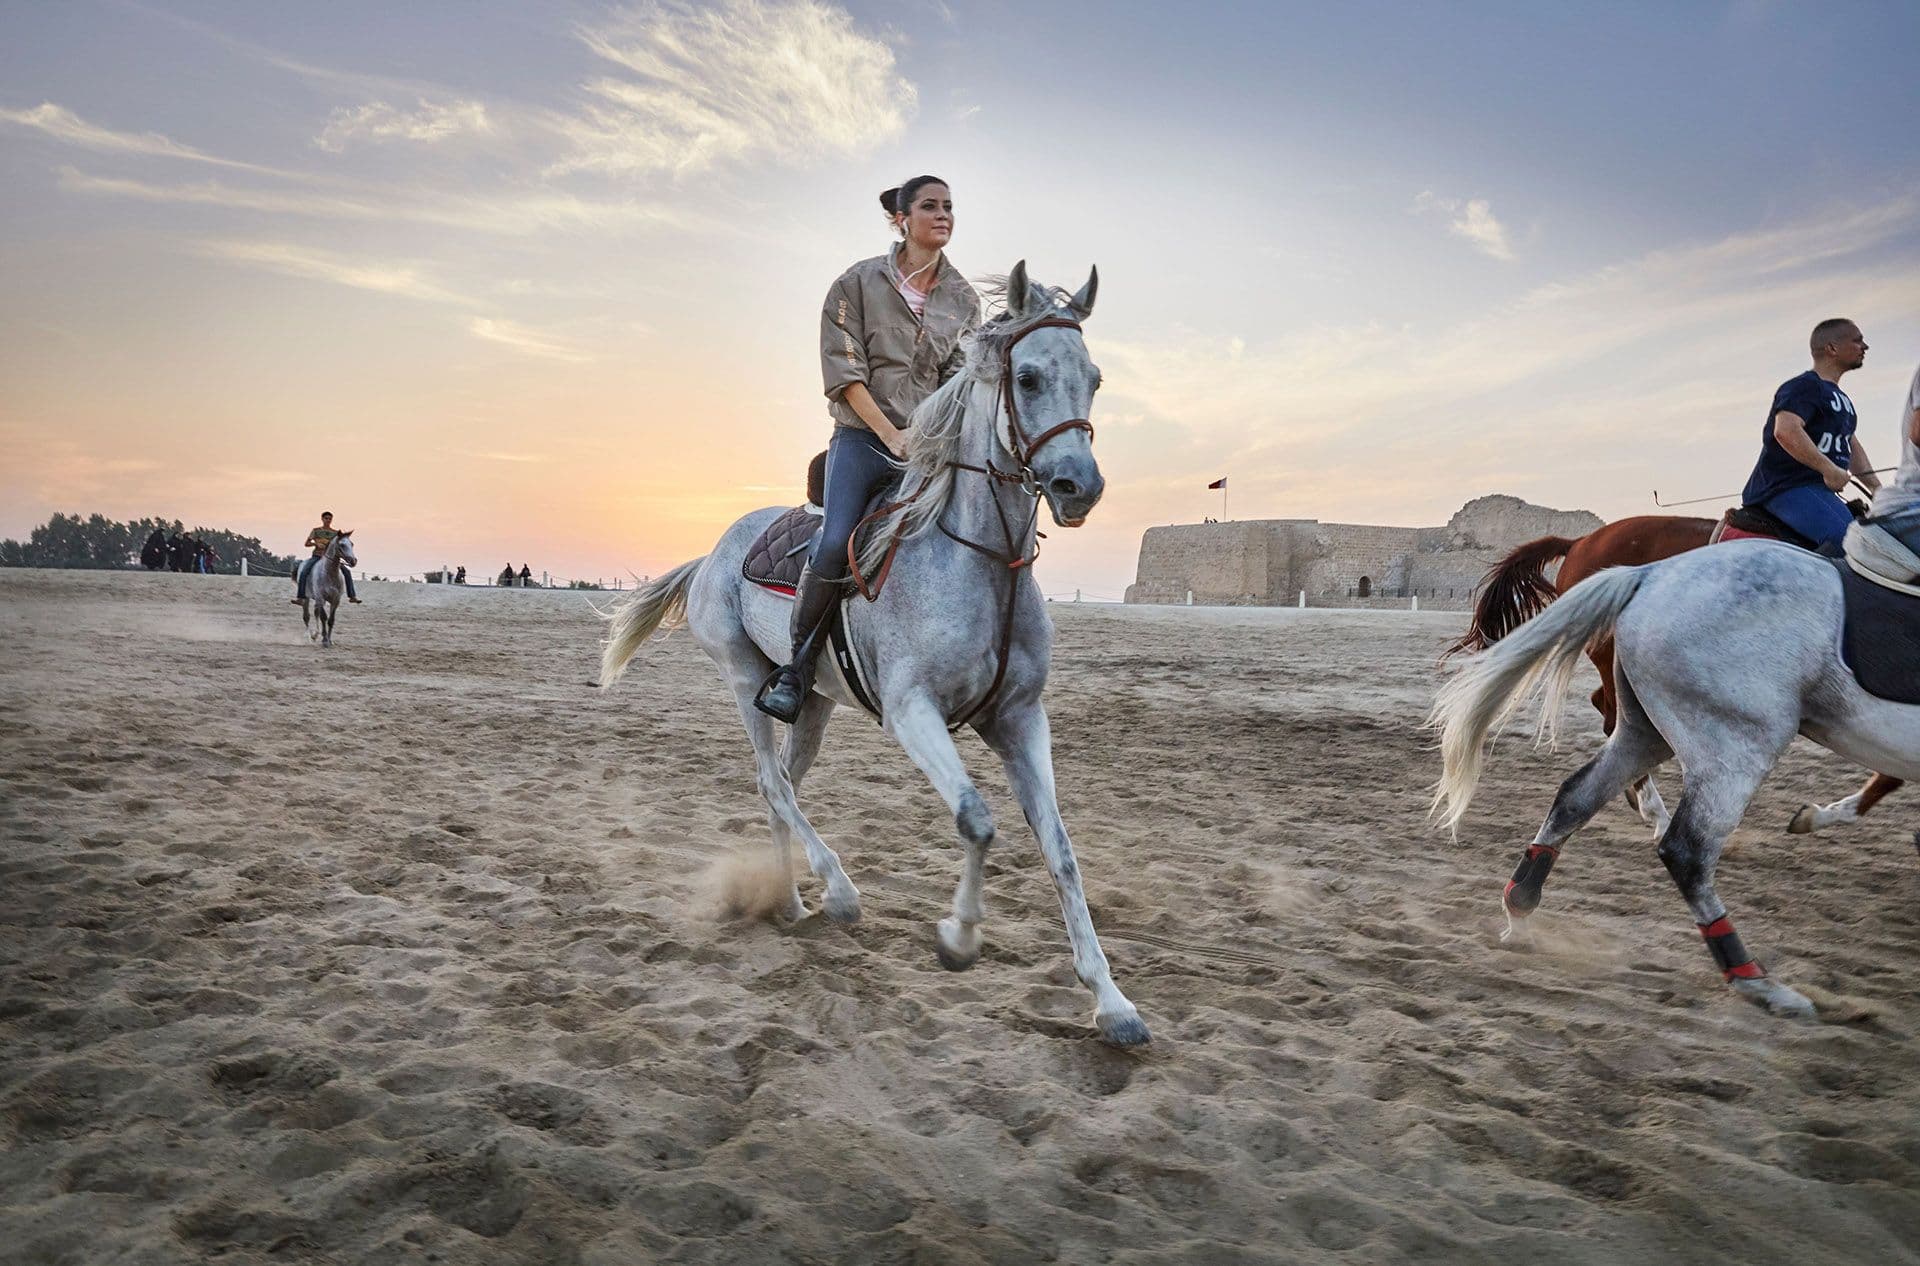 Riding a Horse in the Bahrain Desert